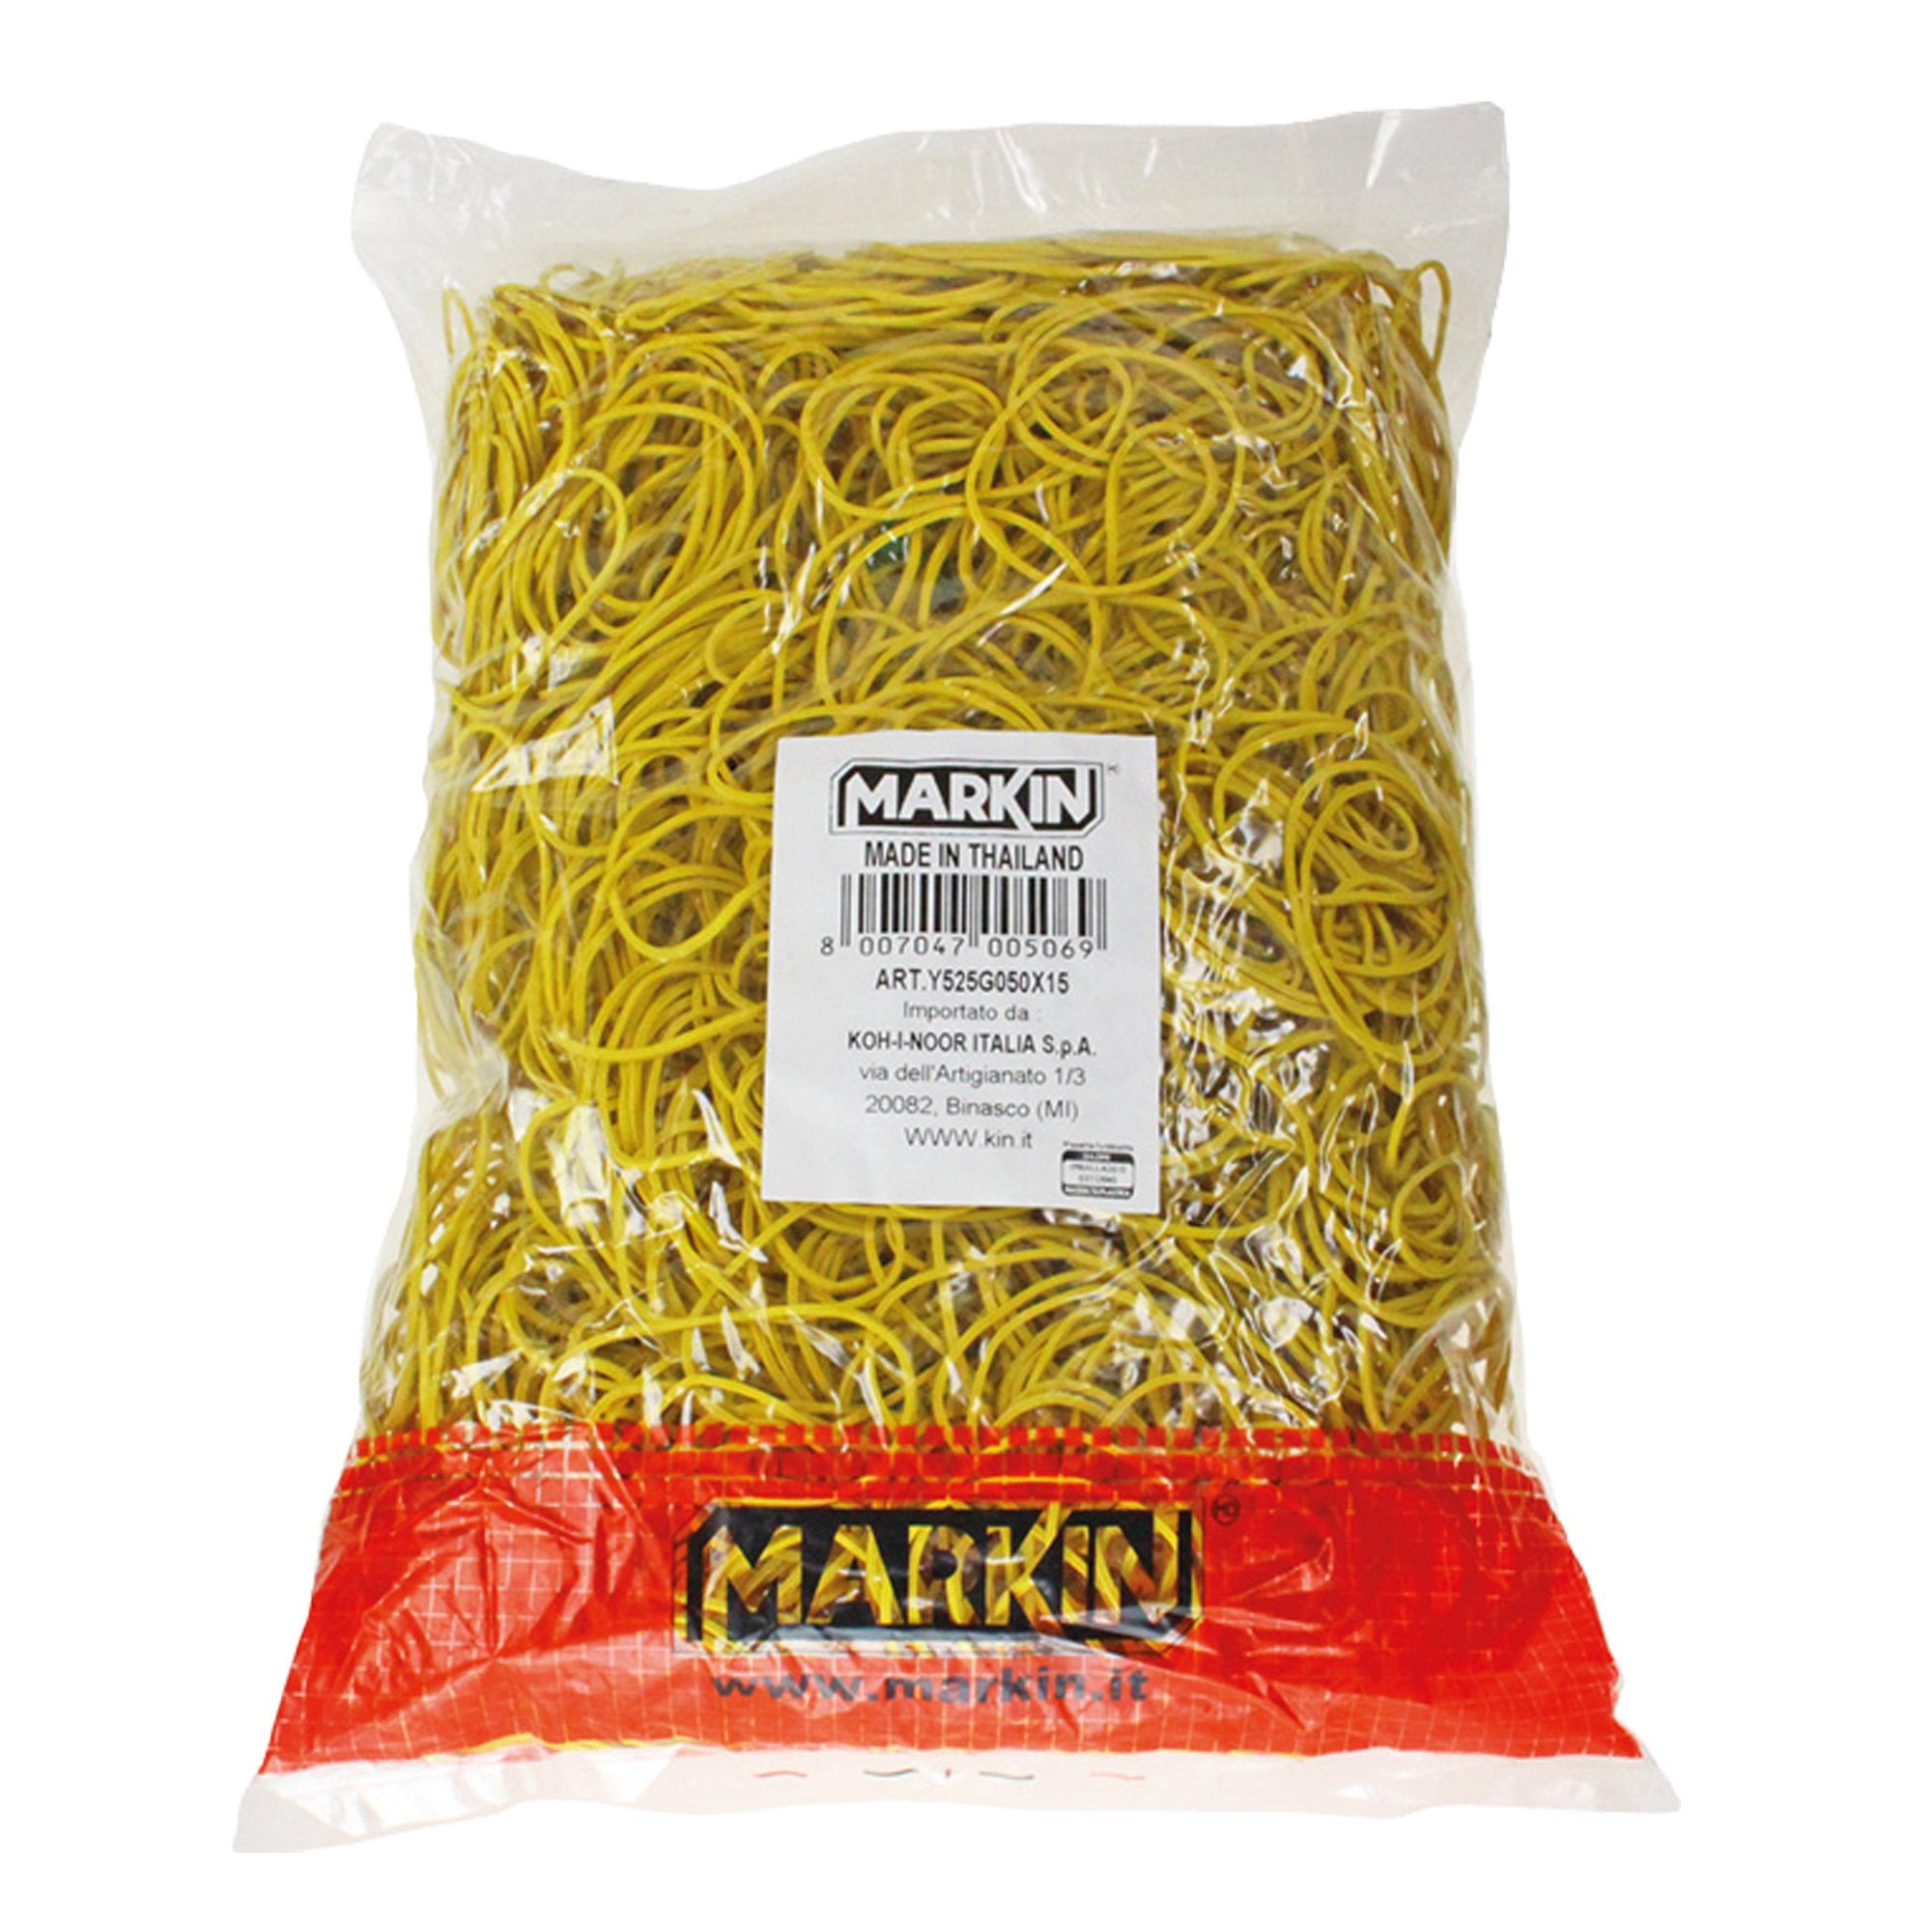 markin-elastico-gomma-giallo-d60-sacco-1kg